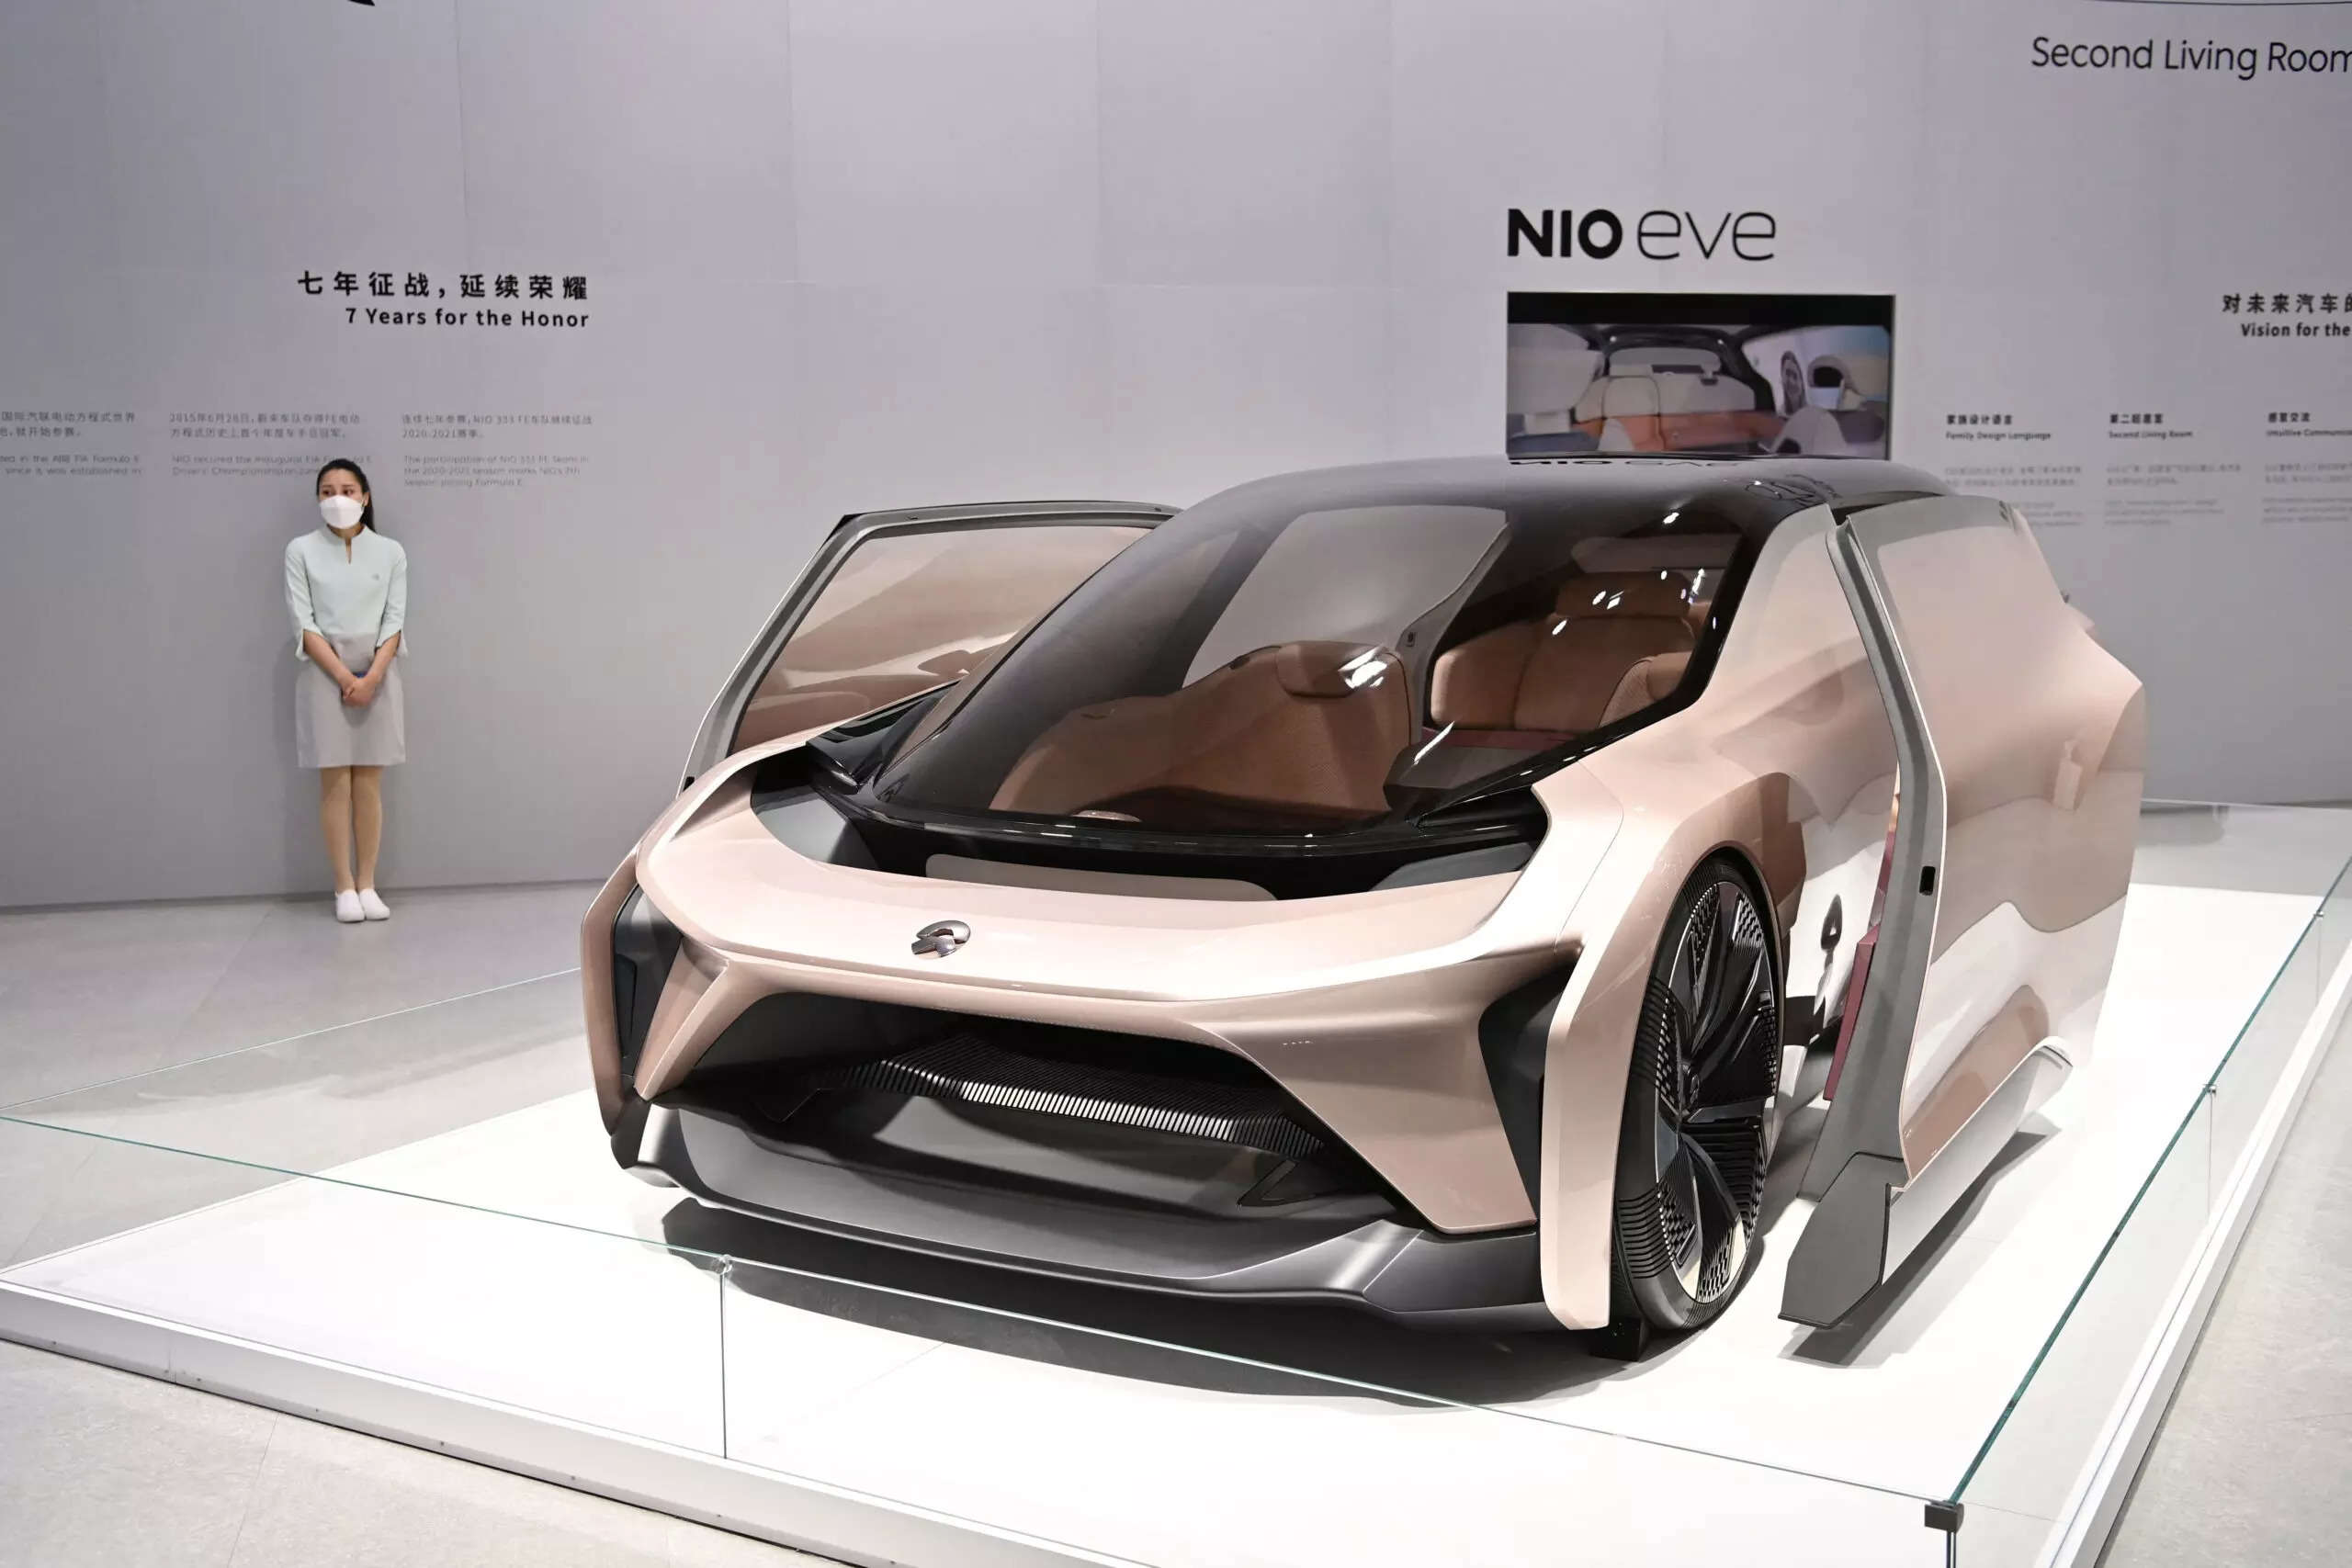  Chinese EV maker Nio